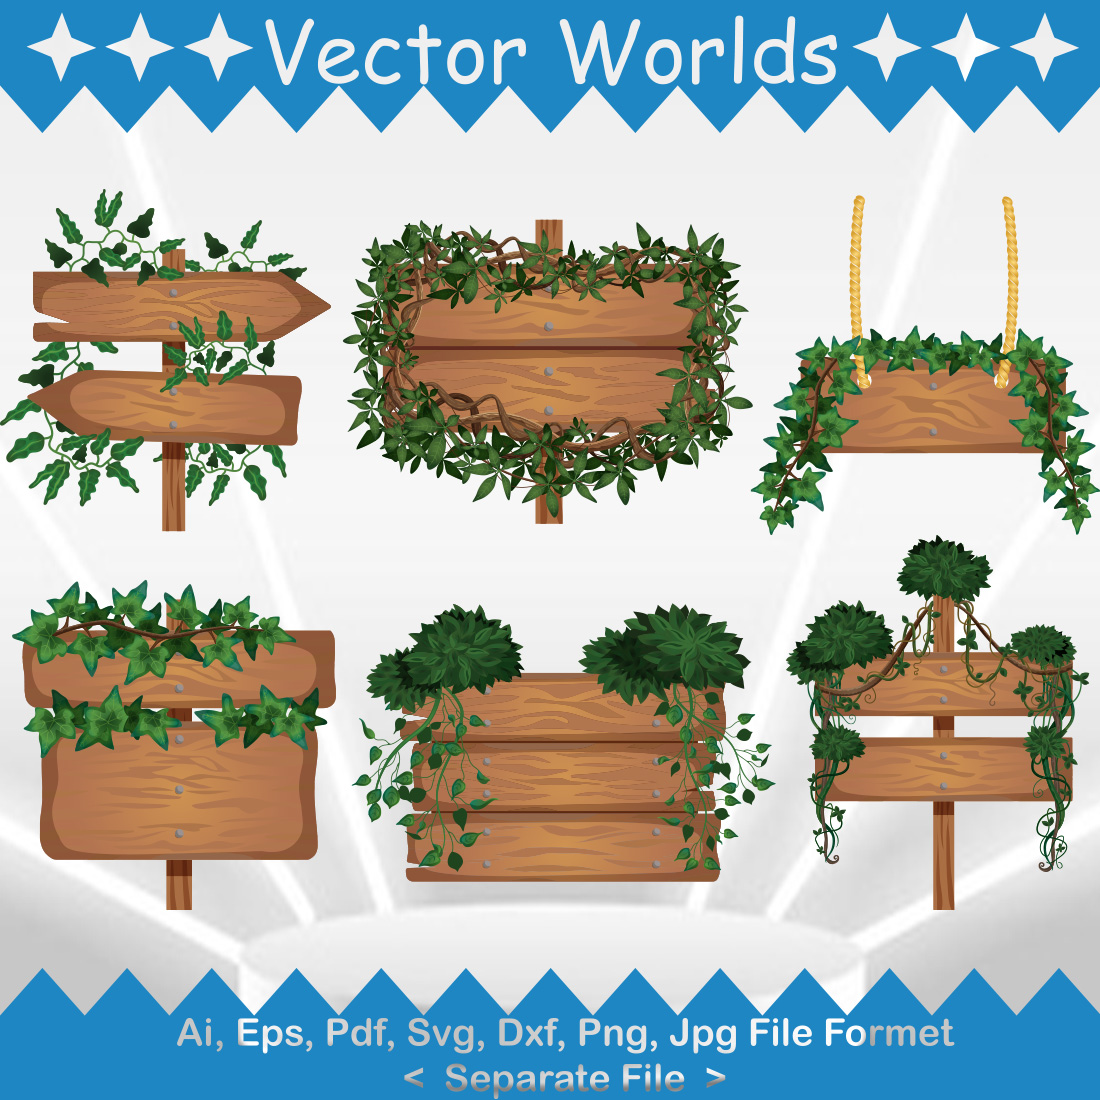 Wooden signboard SVG Vector Design preview image.